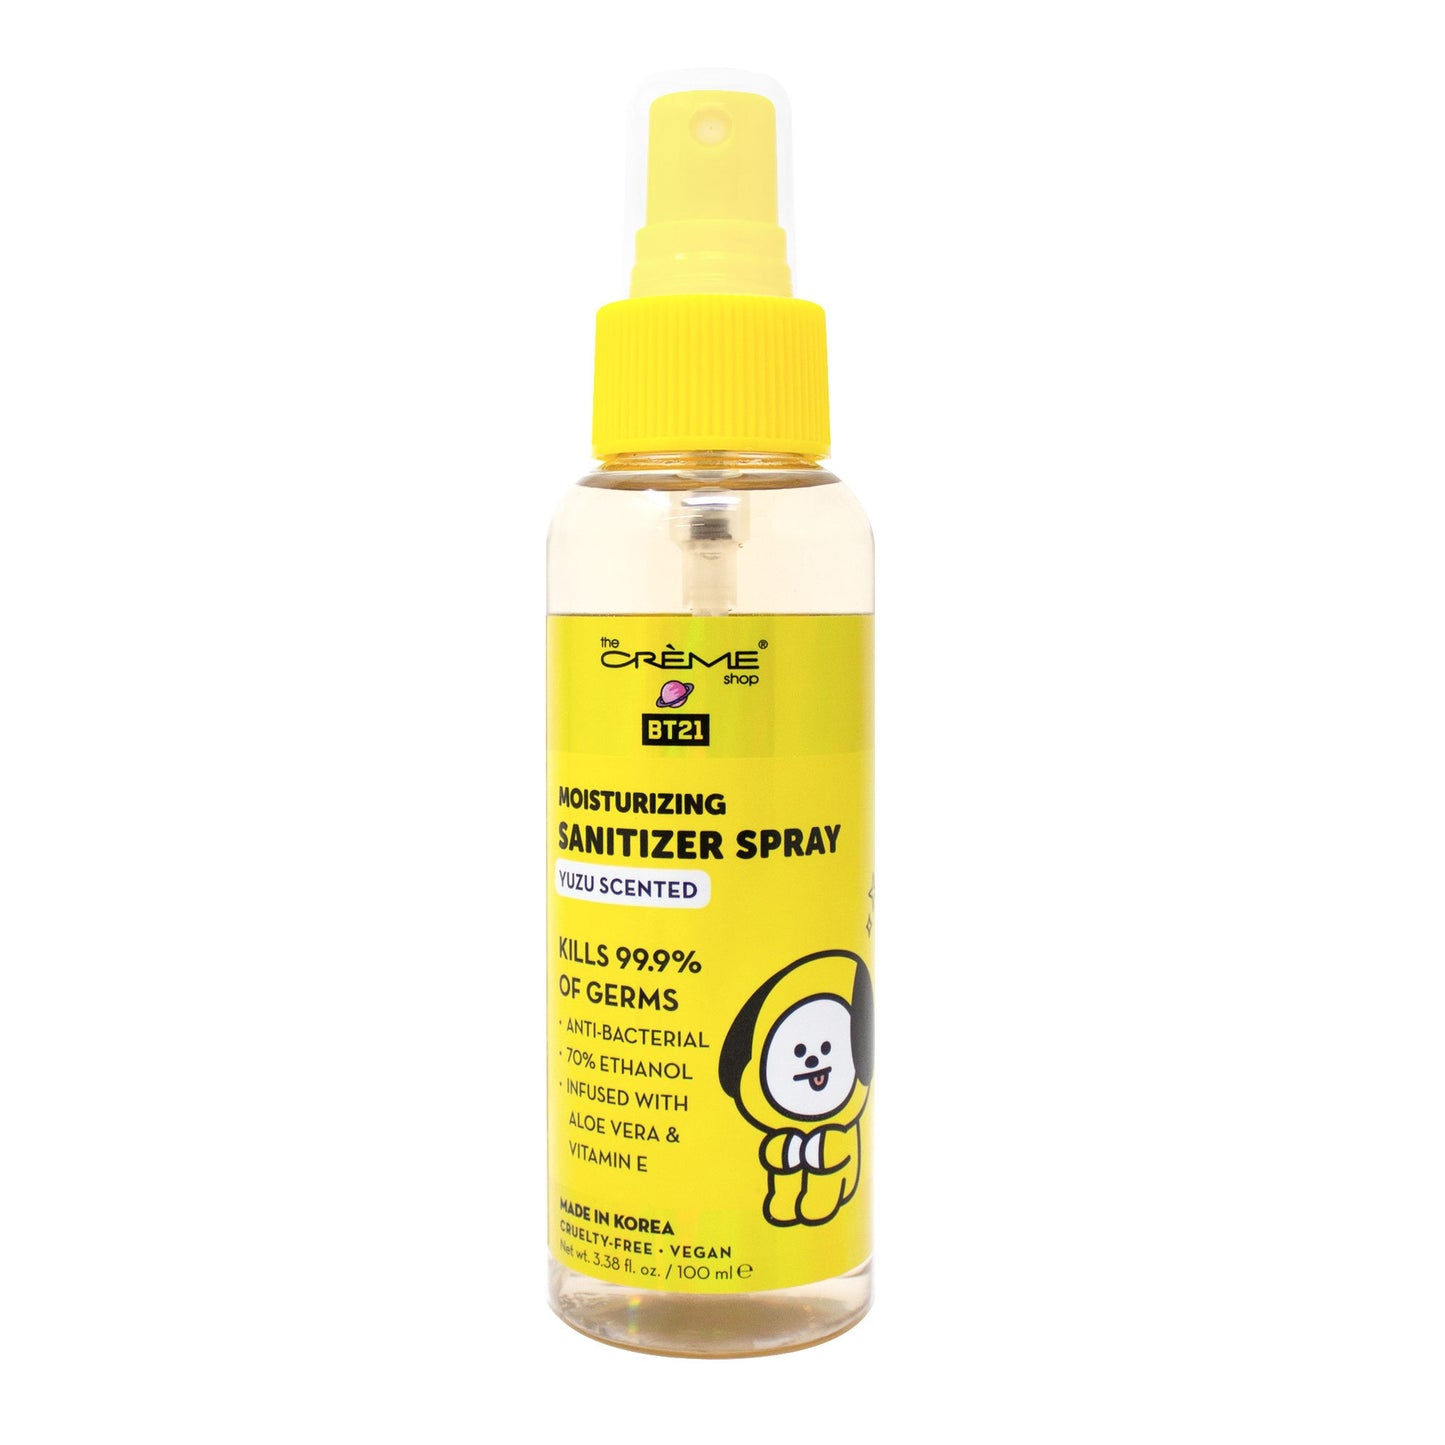 CHIMMY Sanitizing Spray (Yuzu Scented) Sanitizer Sprays - The Crème Shop x BT21 